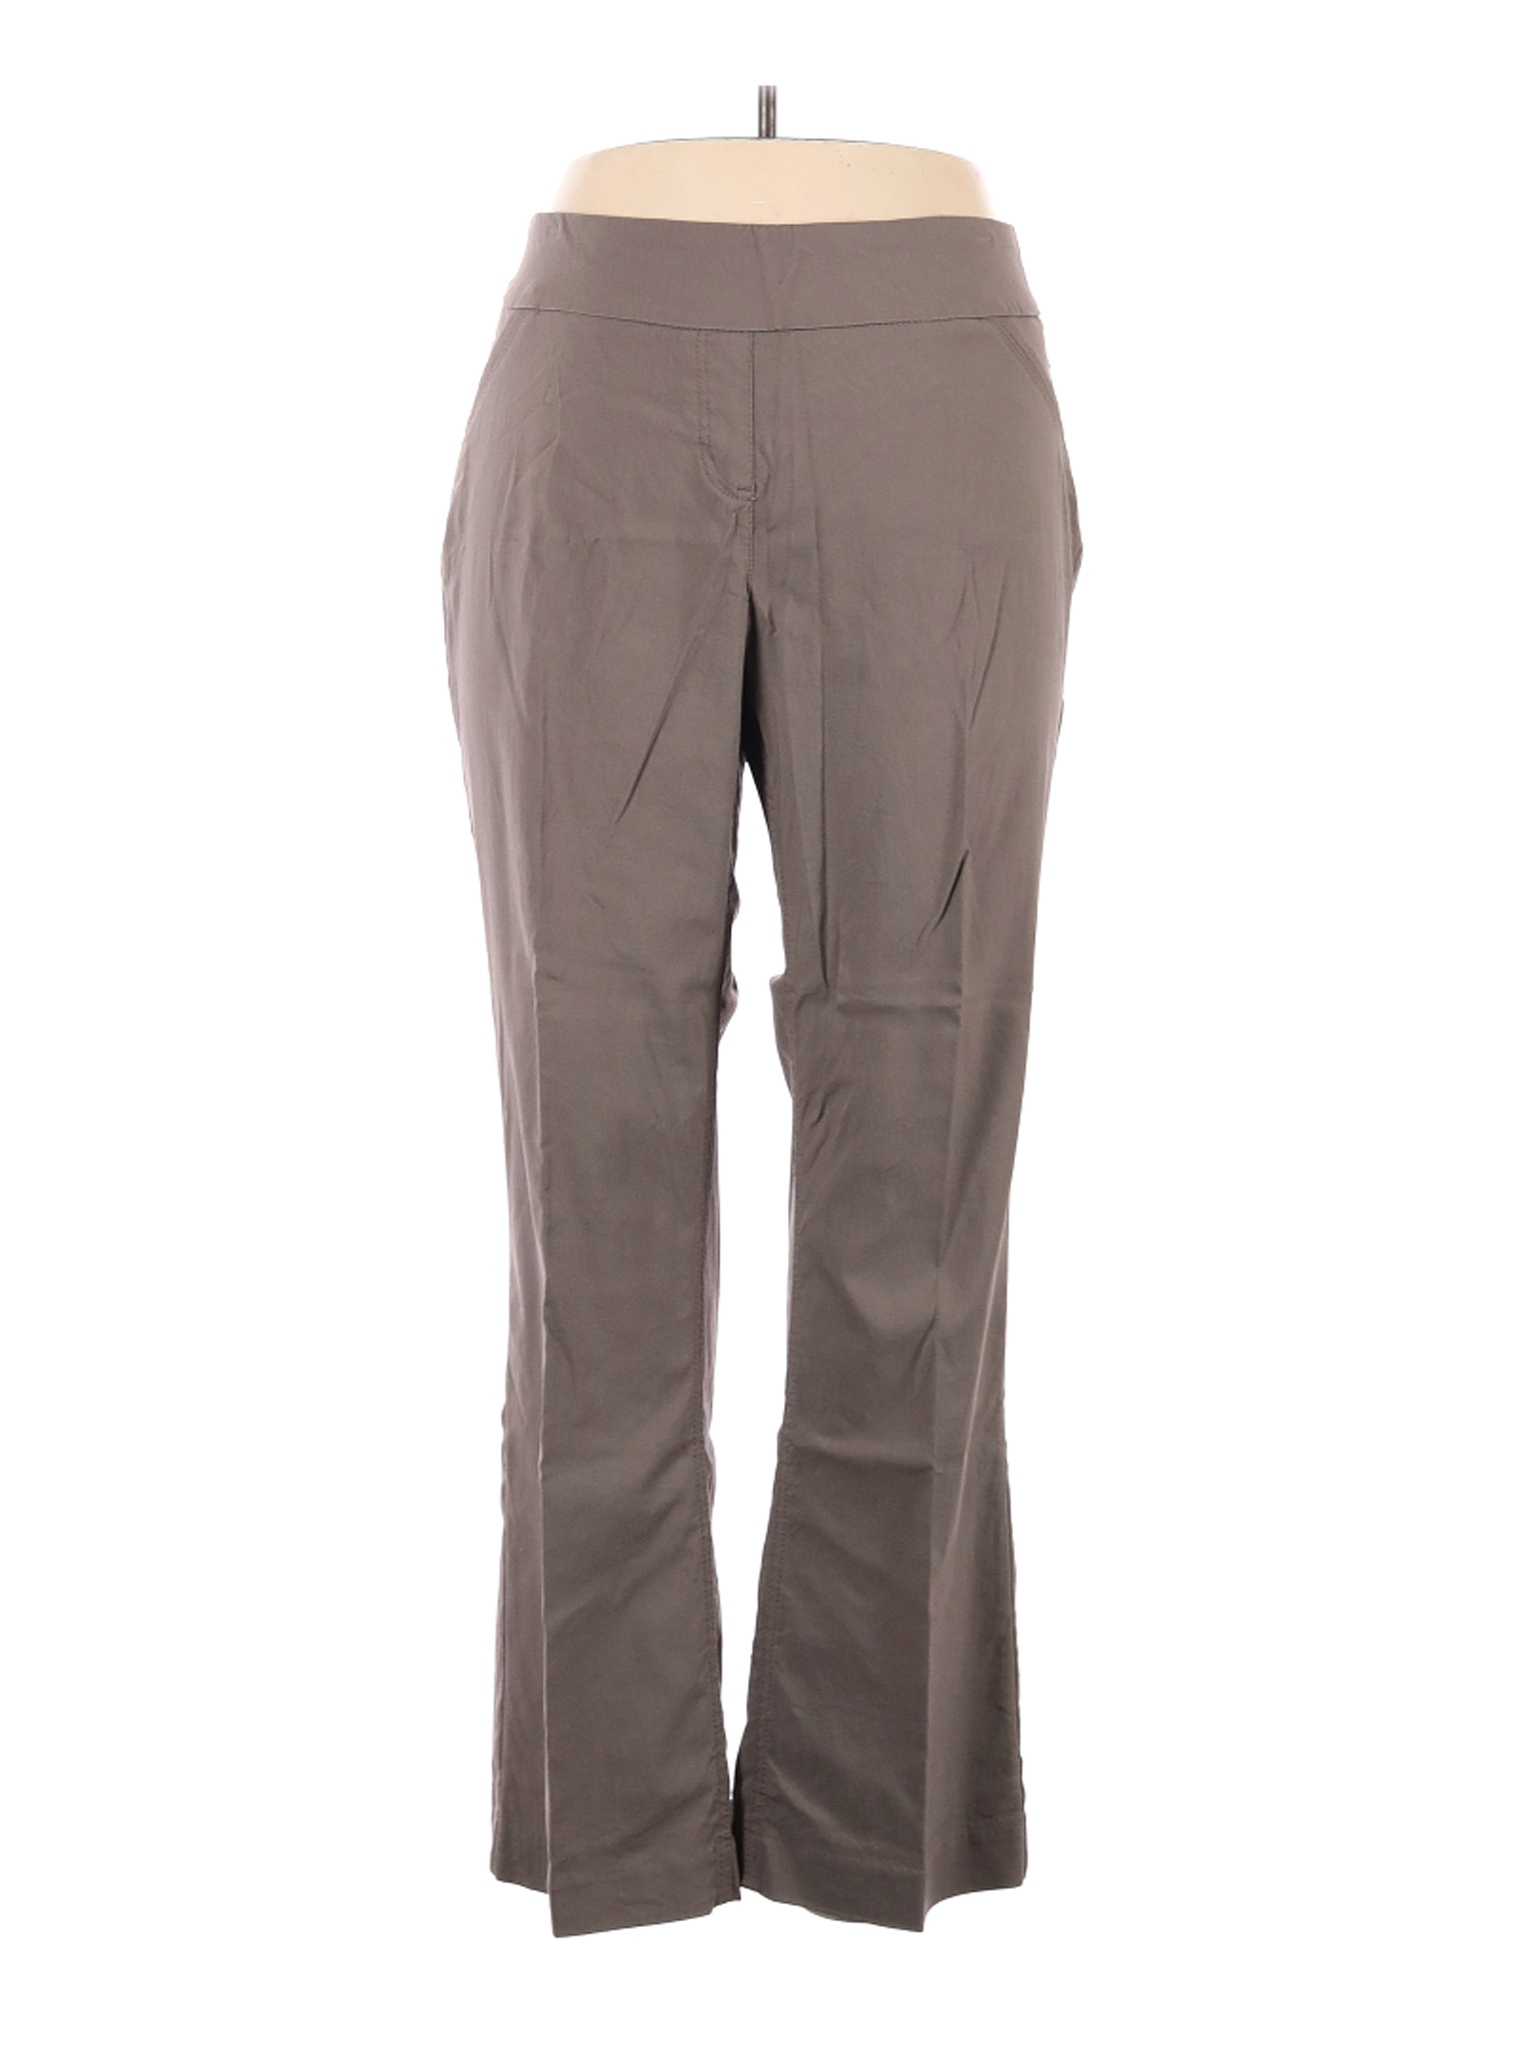 Dillard's Women Brown Casual Pants 18 Plus | eBay